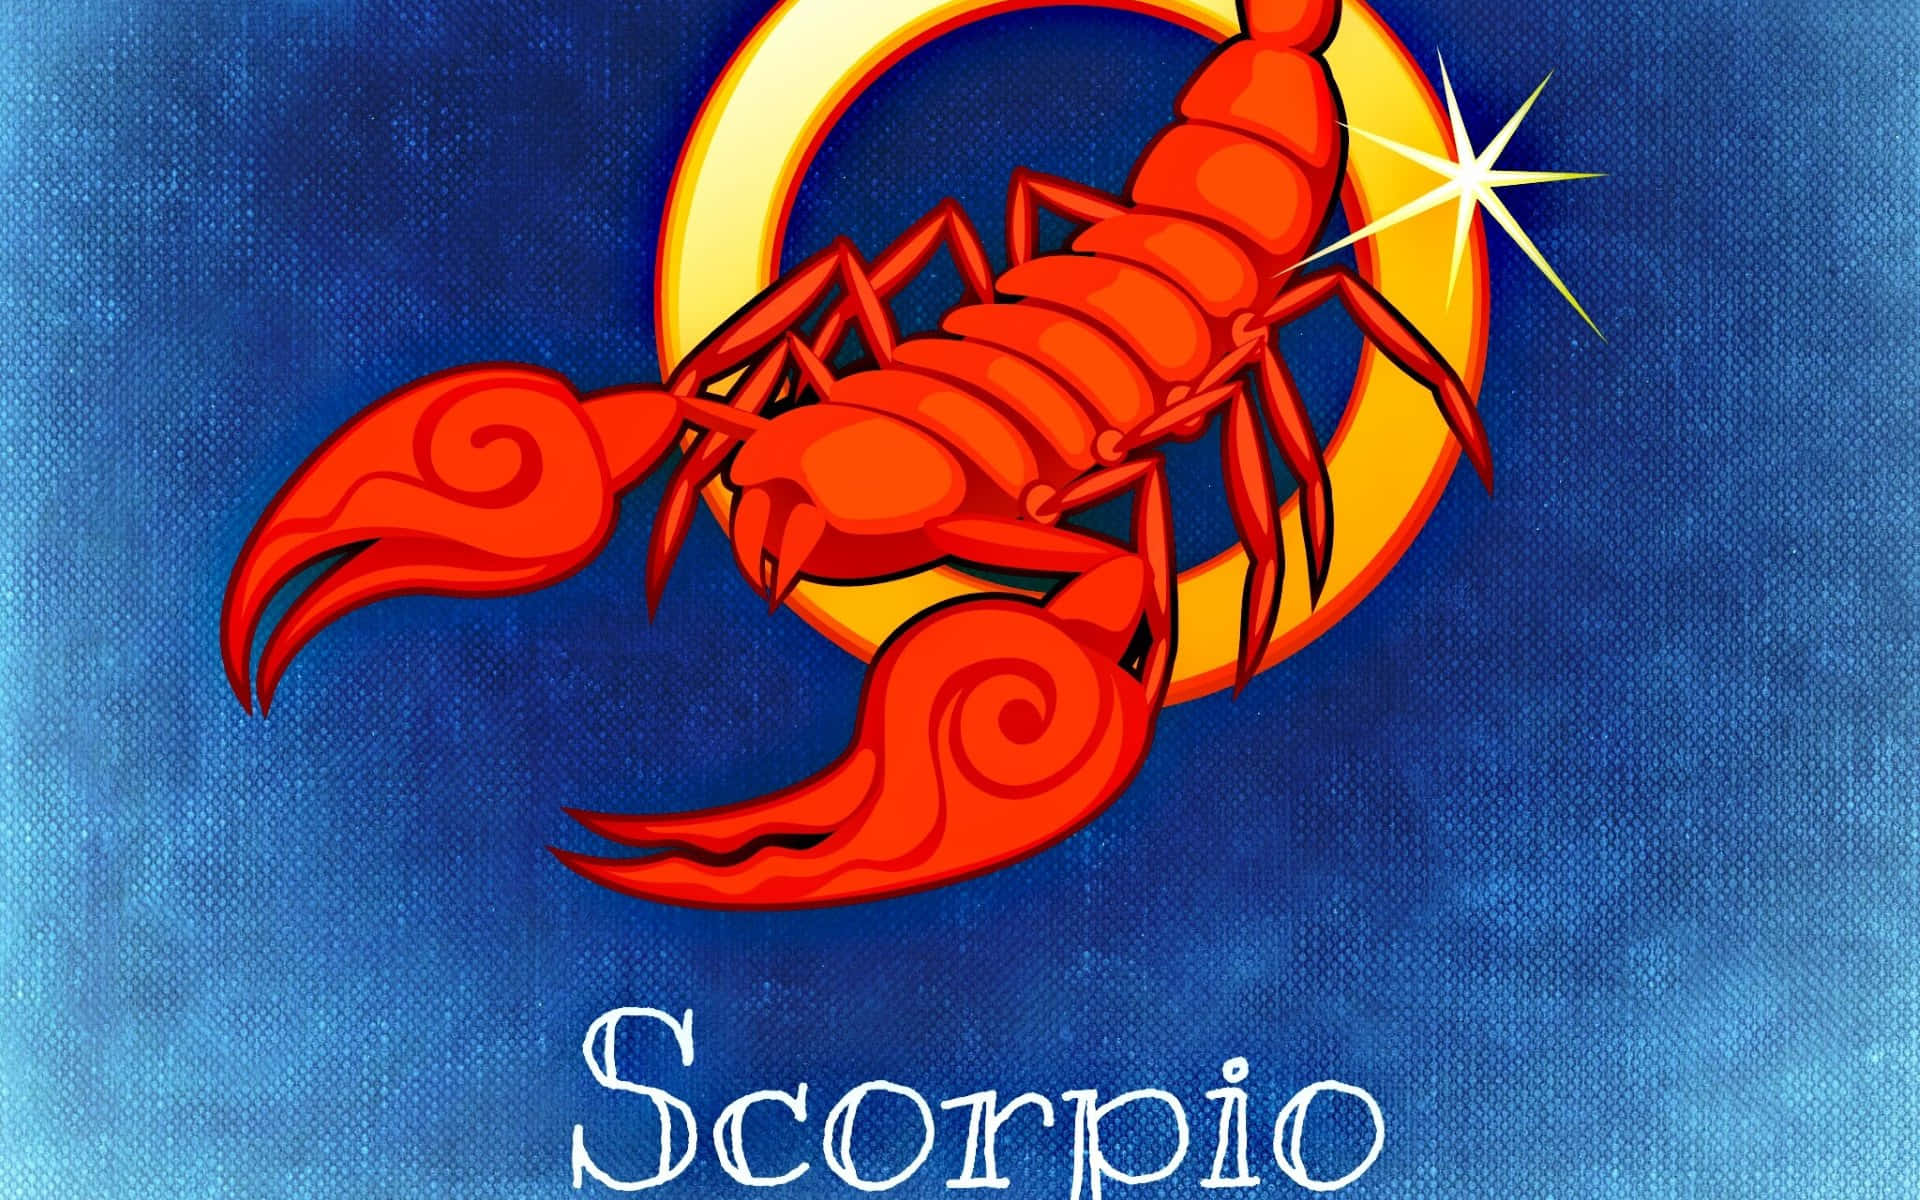 Scorpio Zodiac Sign - Horoscope Wallpaper